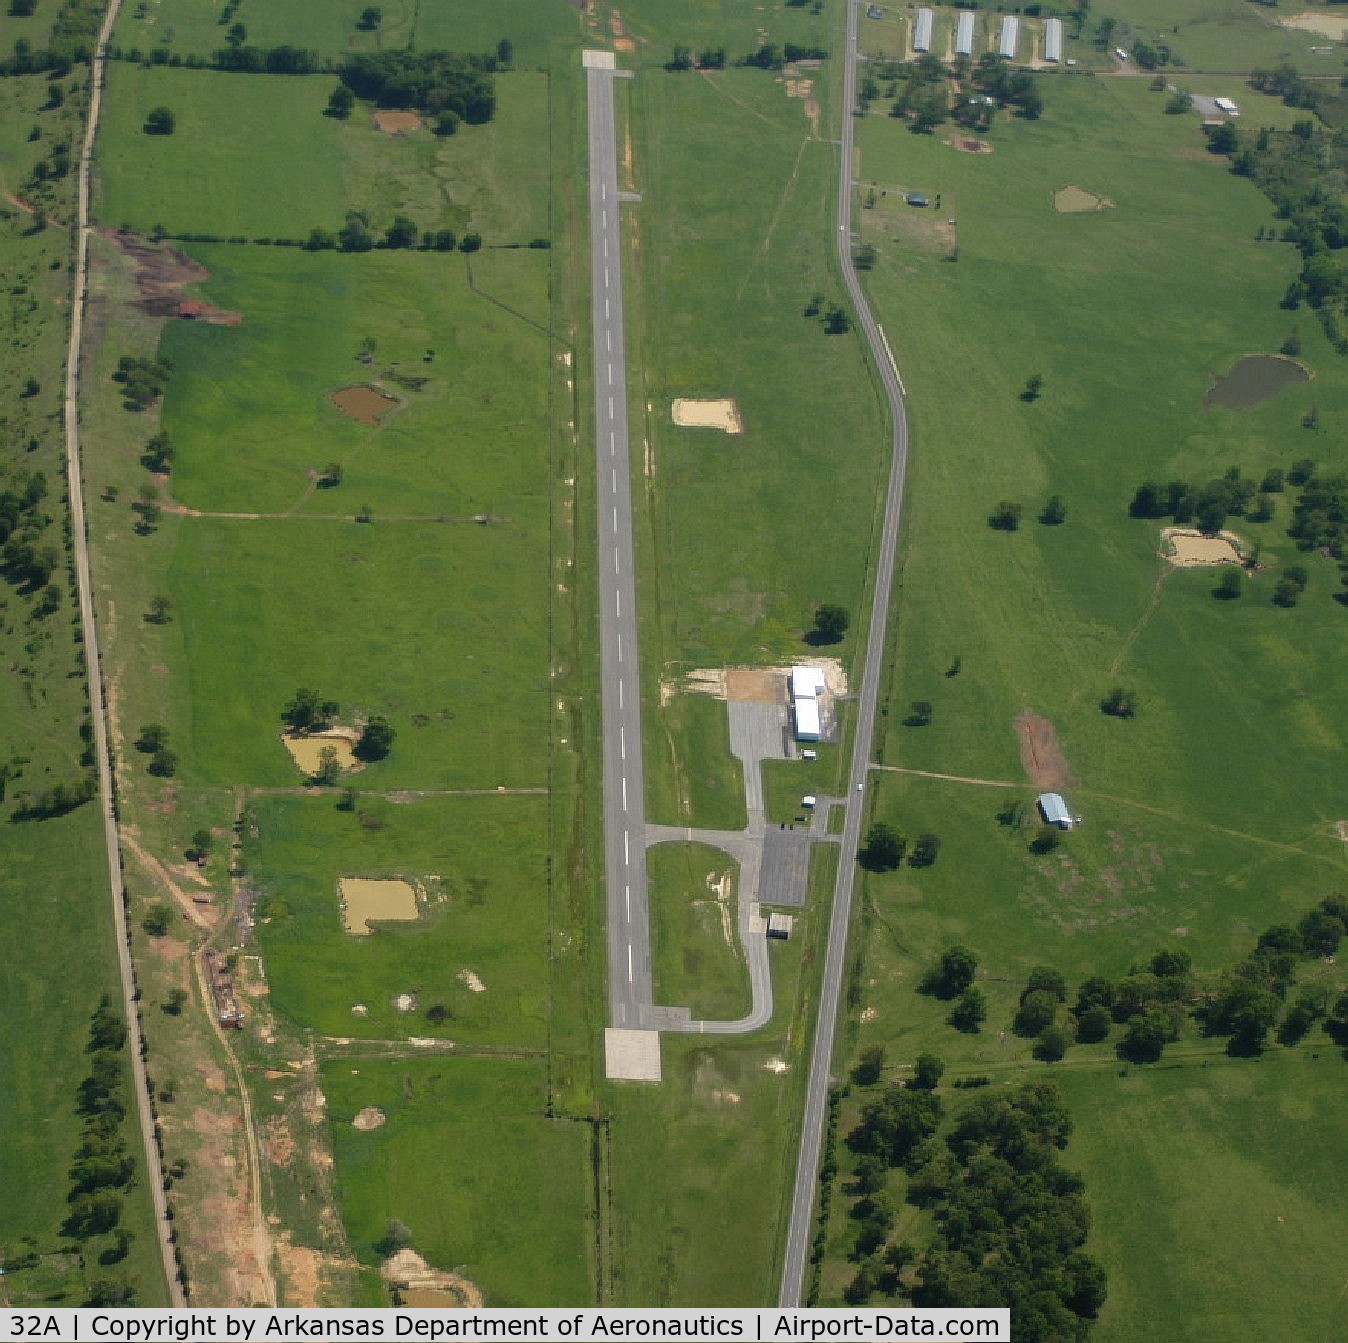 Danville Municipal Airport (32A) - Aerial Photo